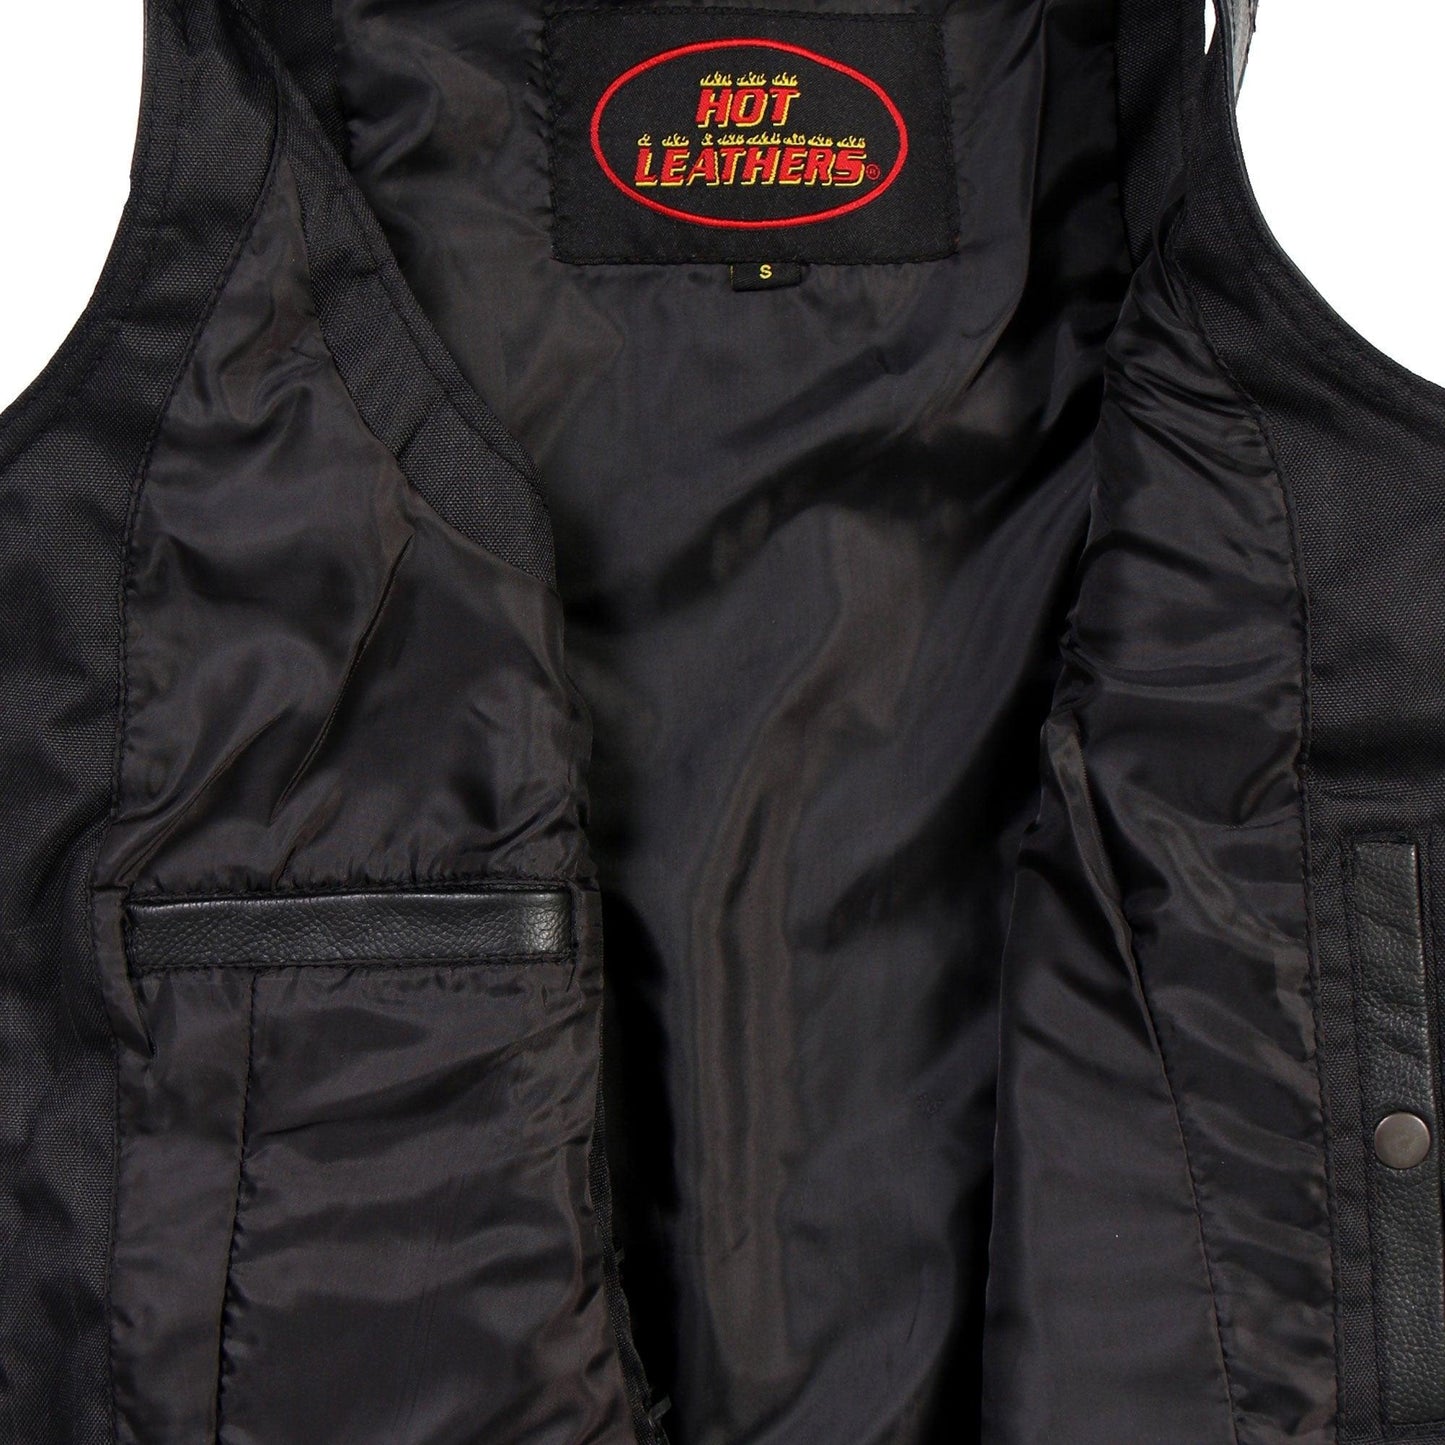 Ladies Black Naked Hot Leathers Leather Biker Vest - Military Republic